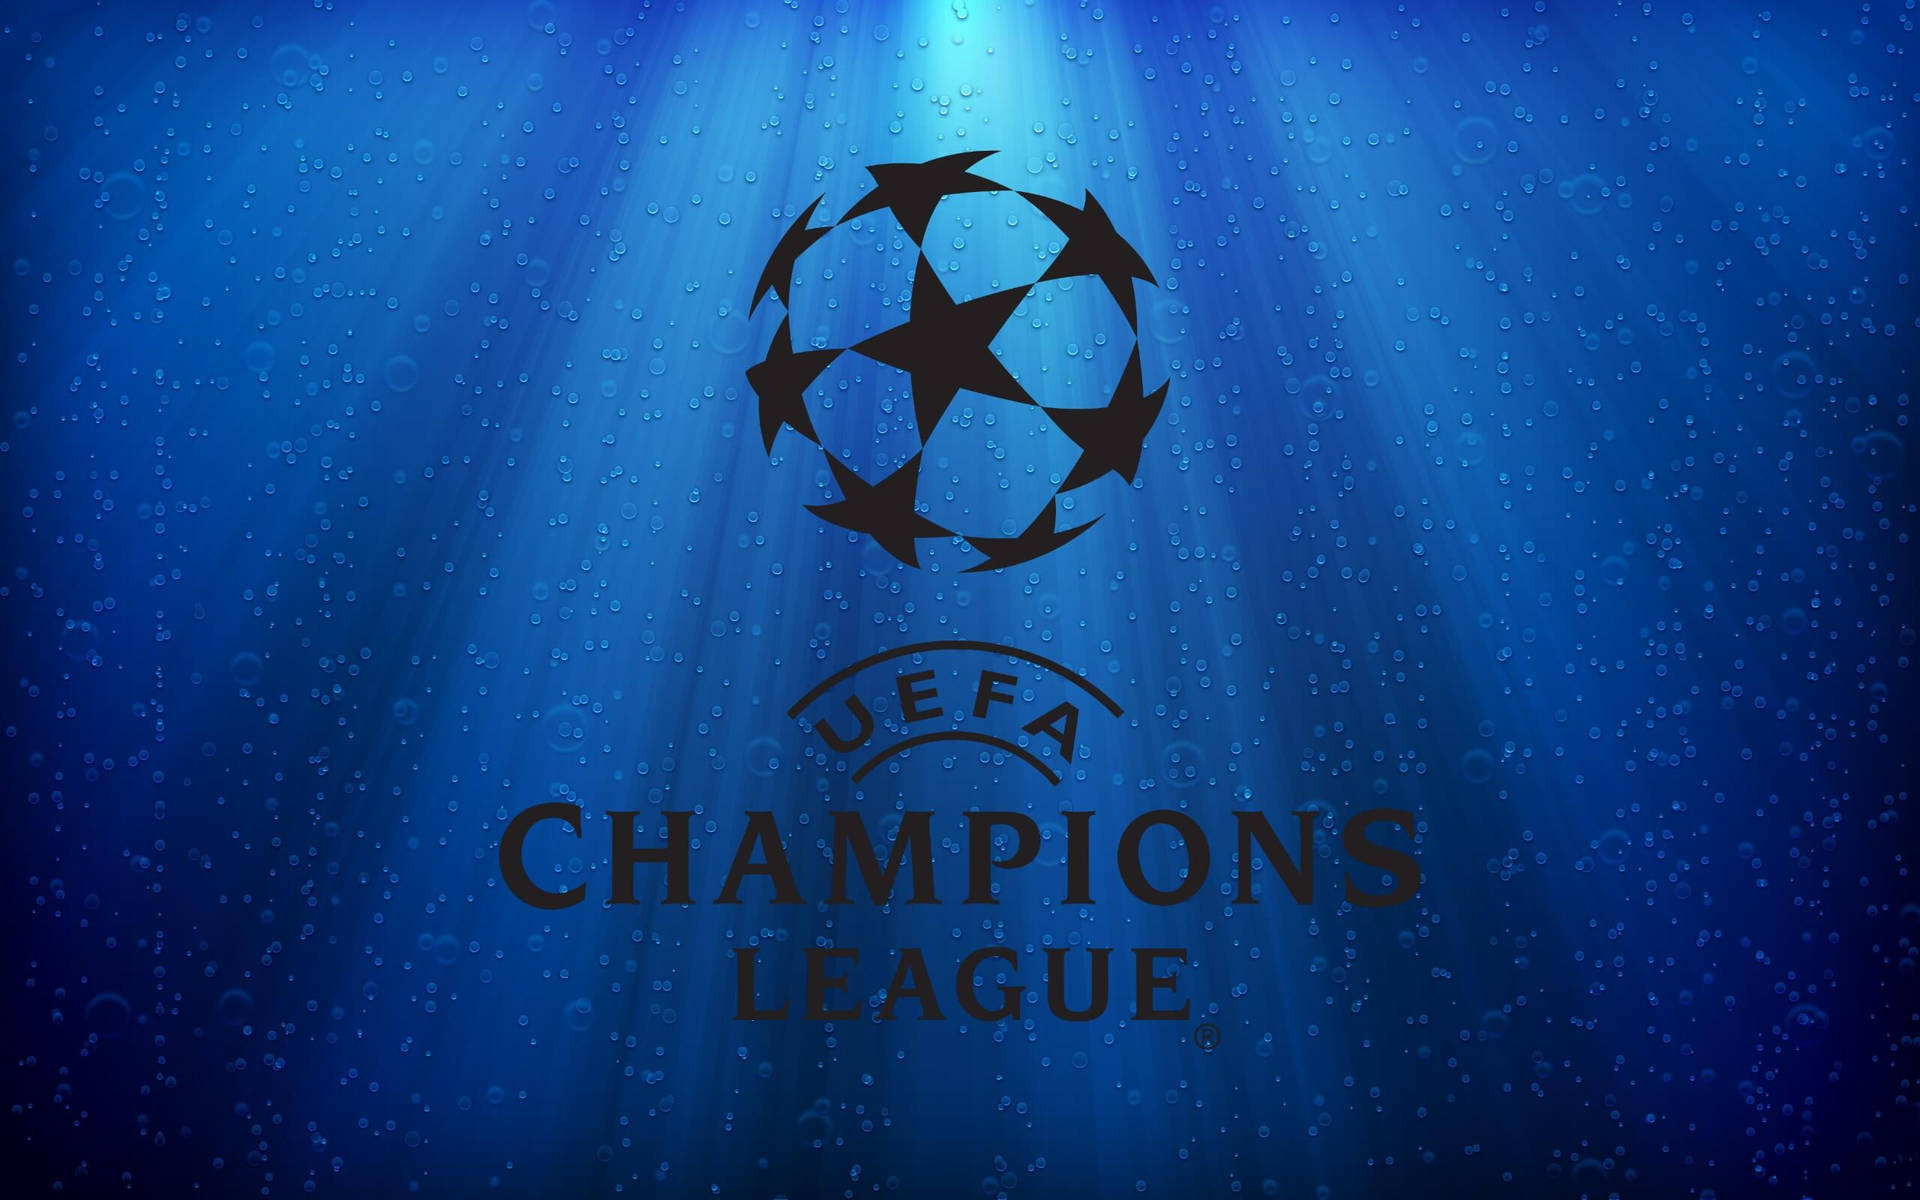 Uefa Champions League In Blue Rain Drop